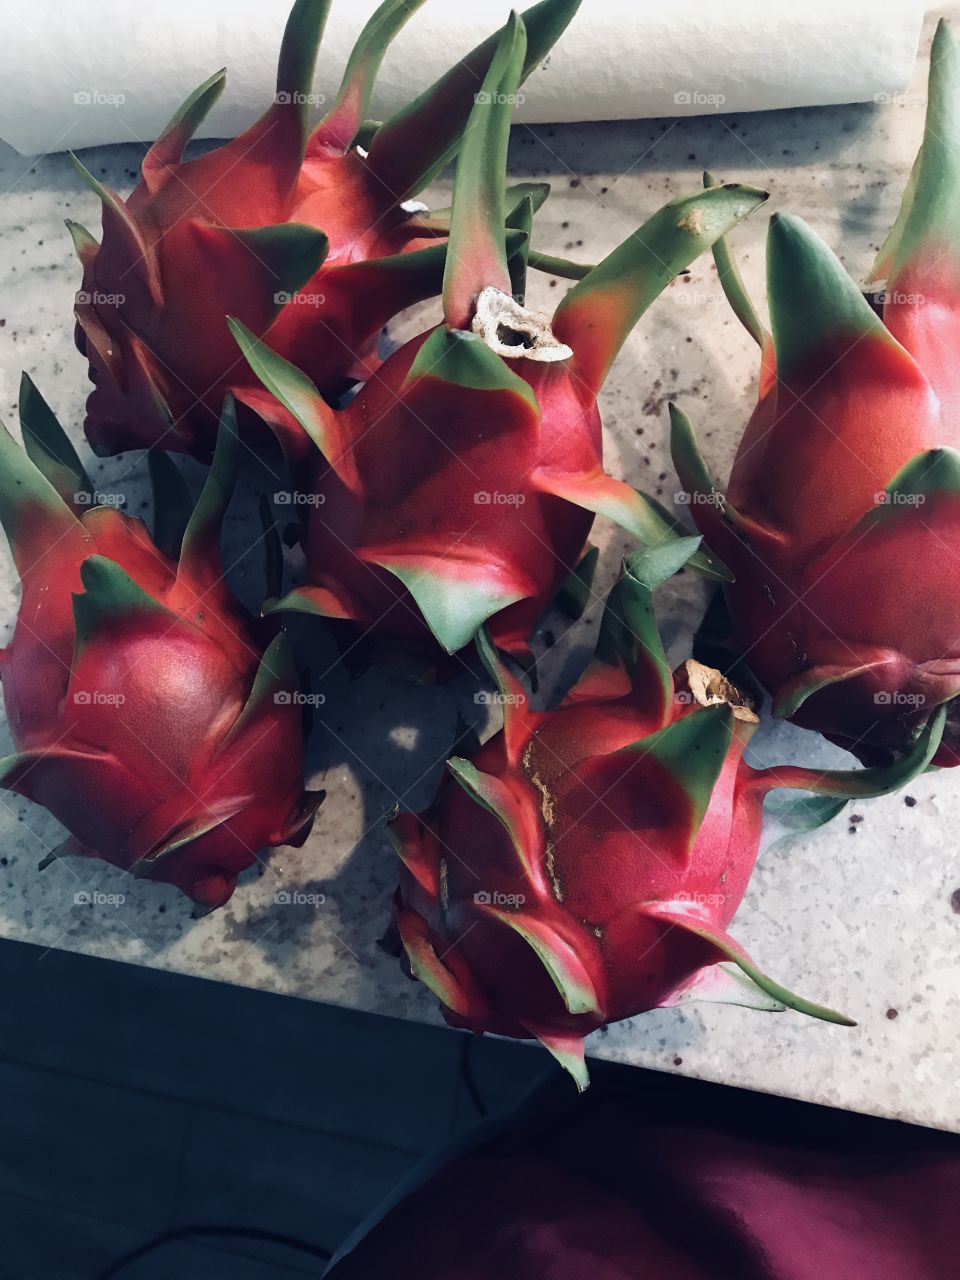 Dragon Fruits